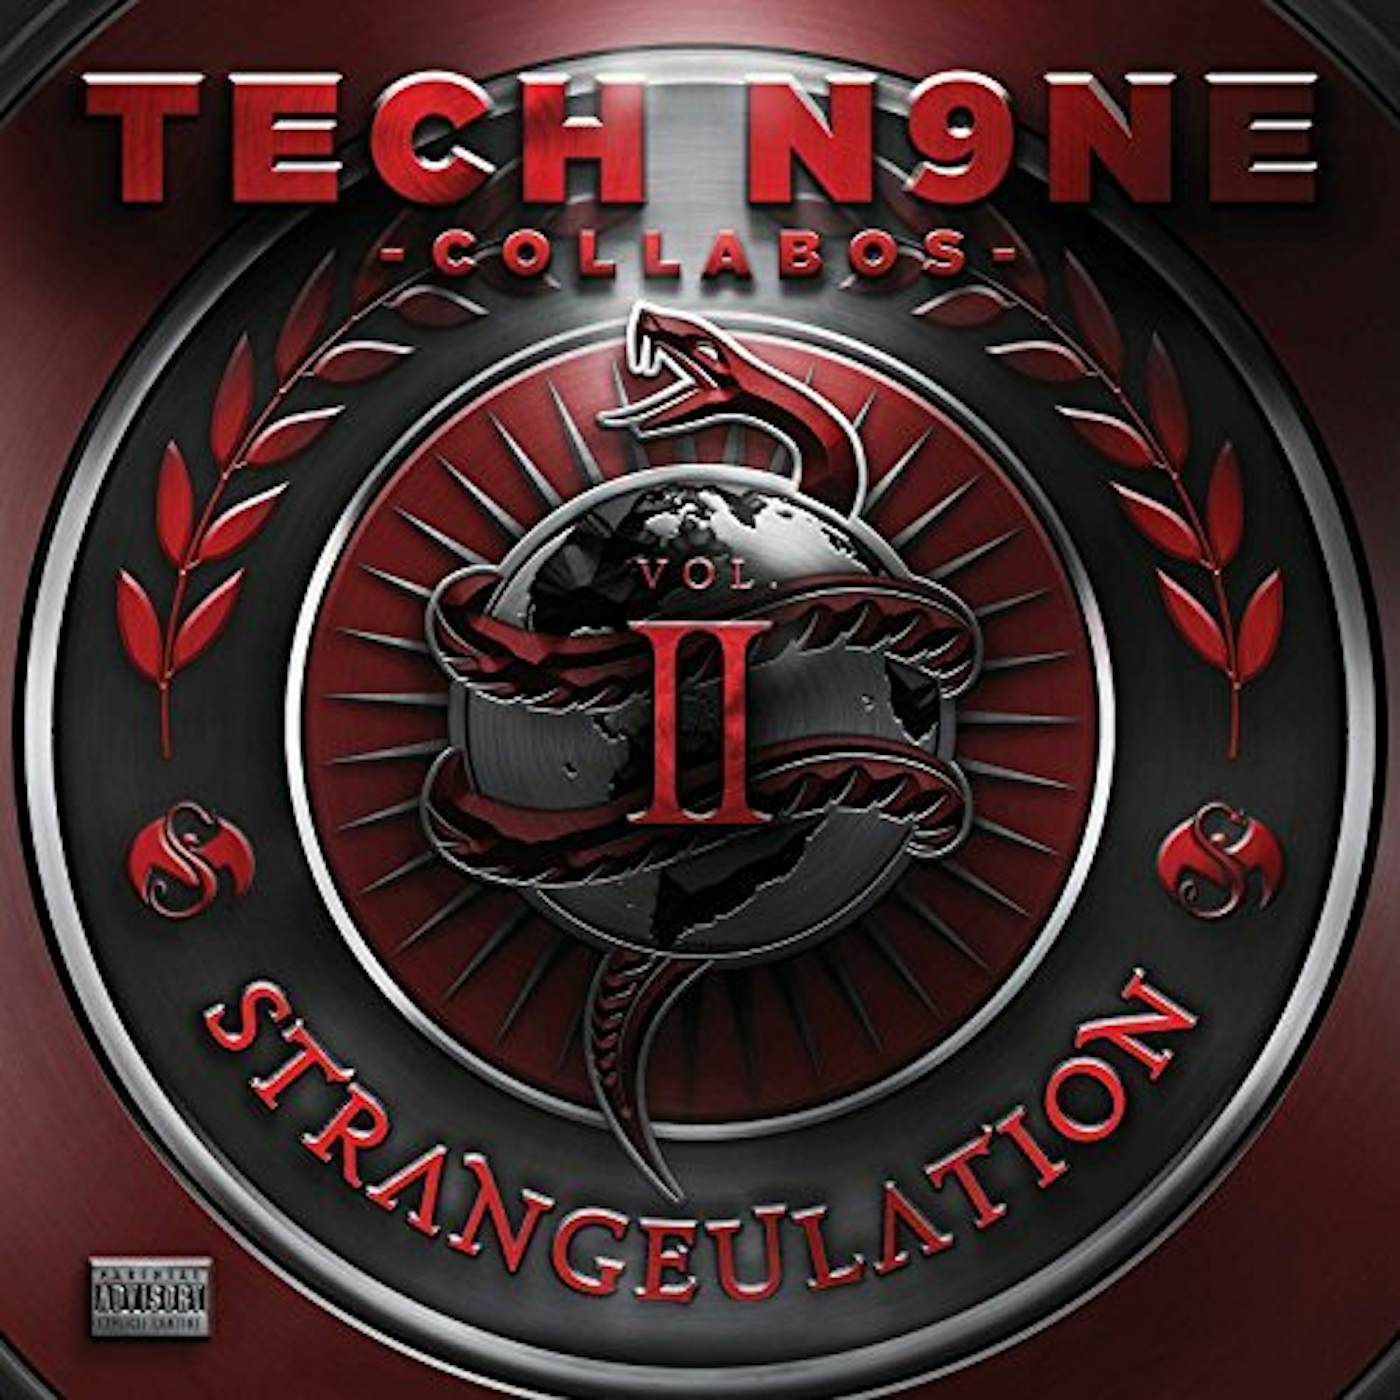 Tech N9ne Collabos STRANGEULATION VOL II Vinyl Record